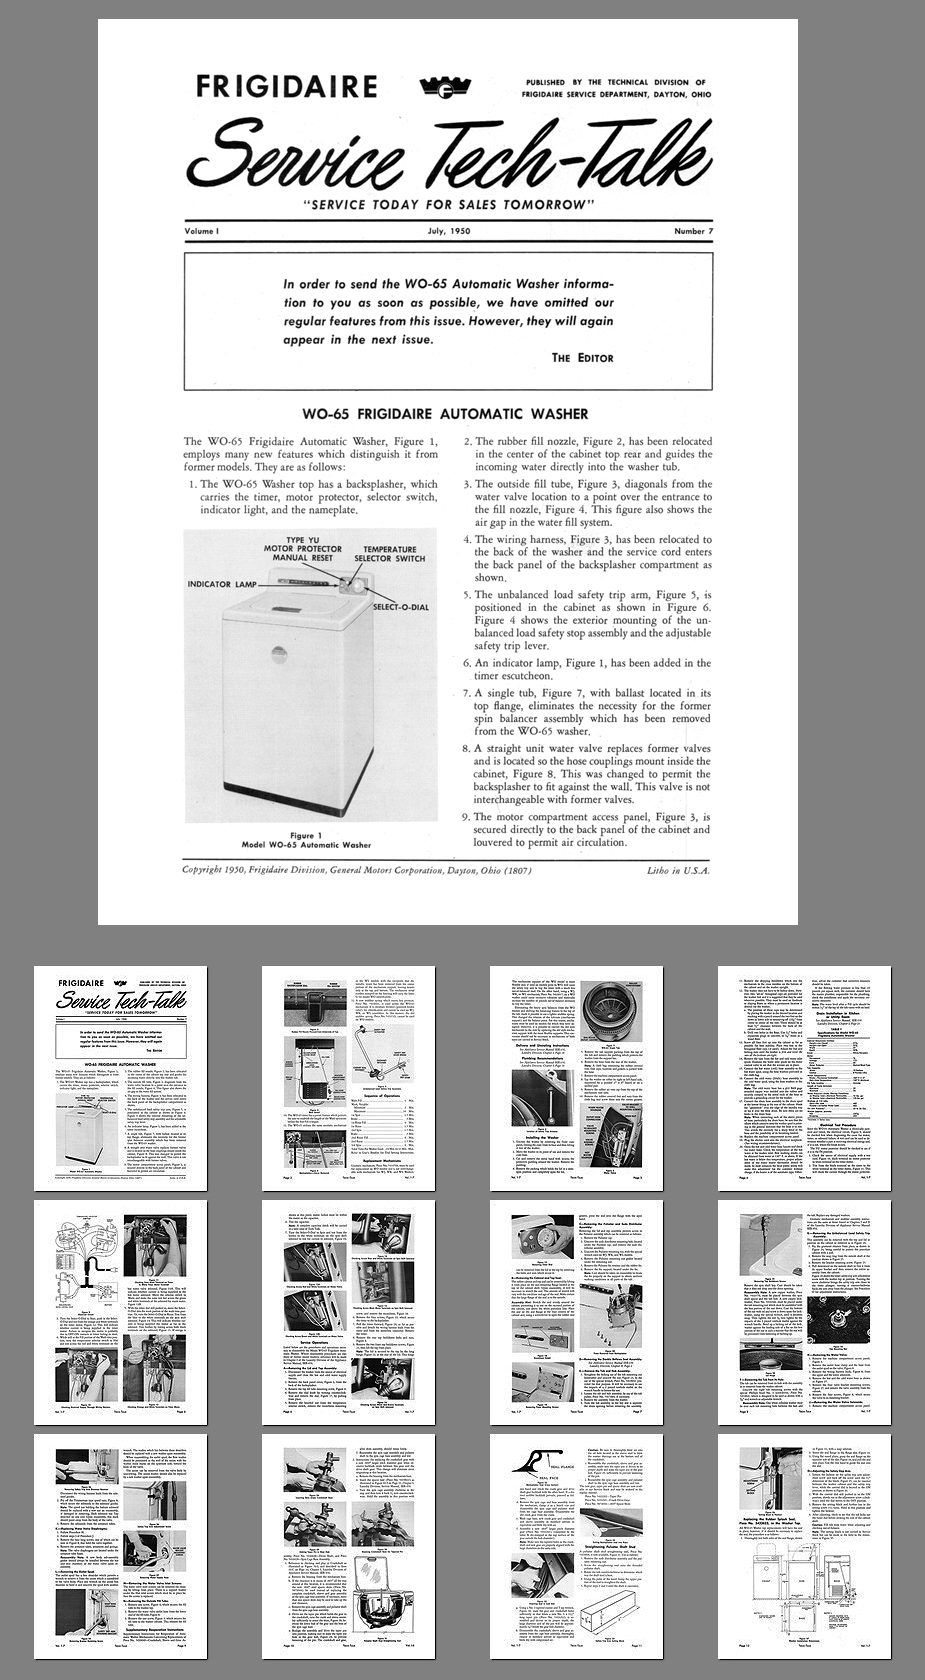 1964 Frigidaire Electric Ranges Ad - RCIH-645, RCIH-639 and RCI-G75-64